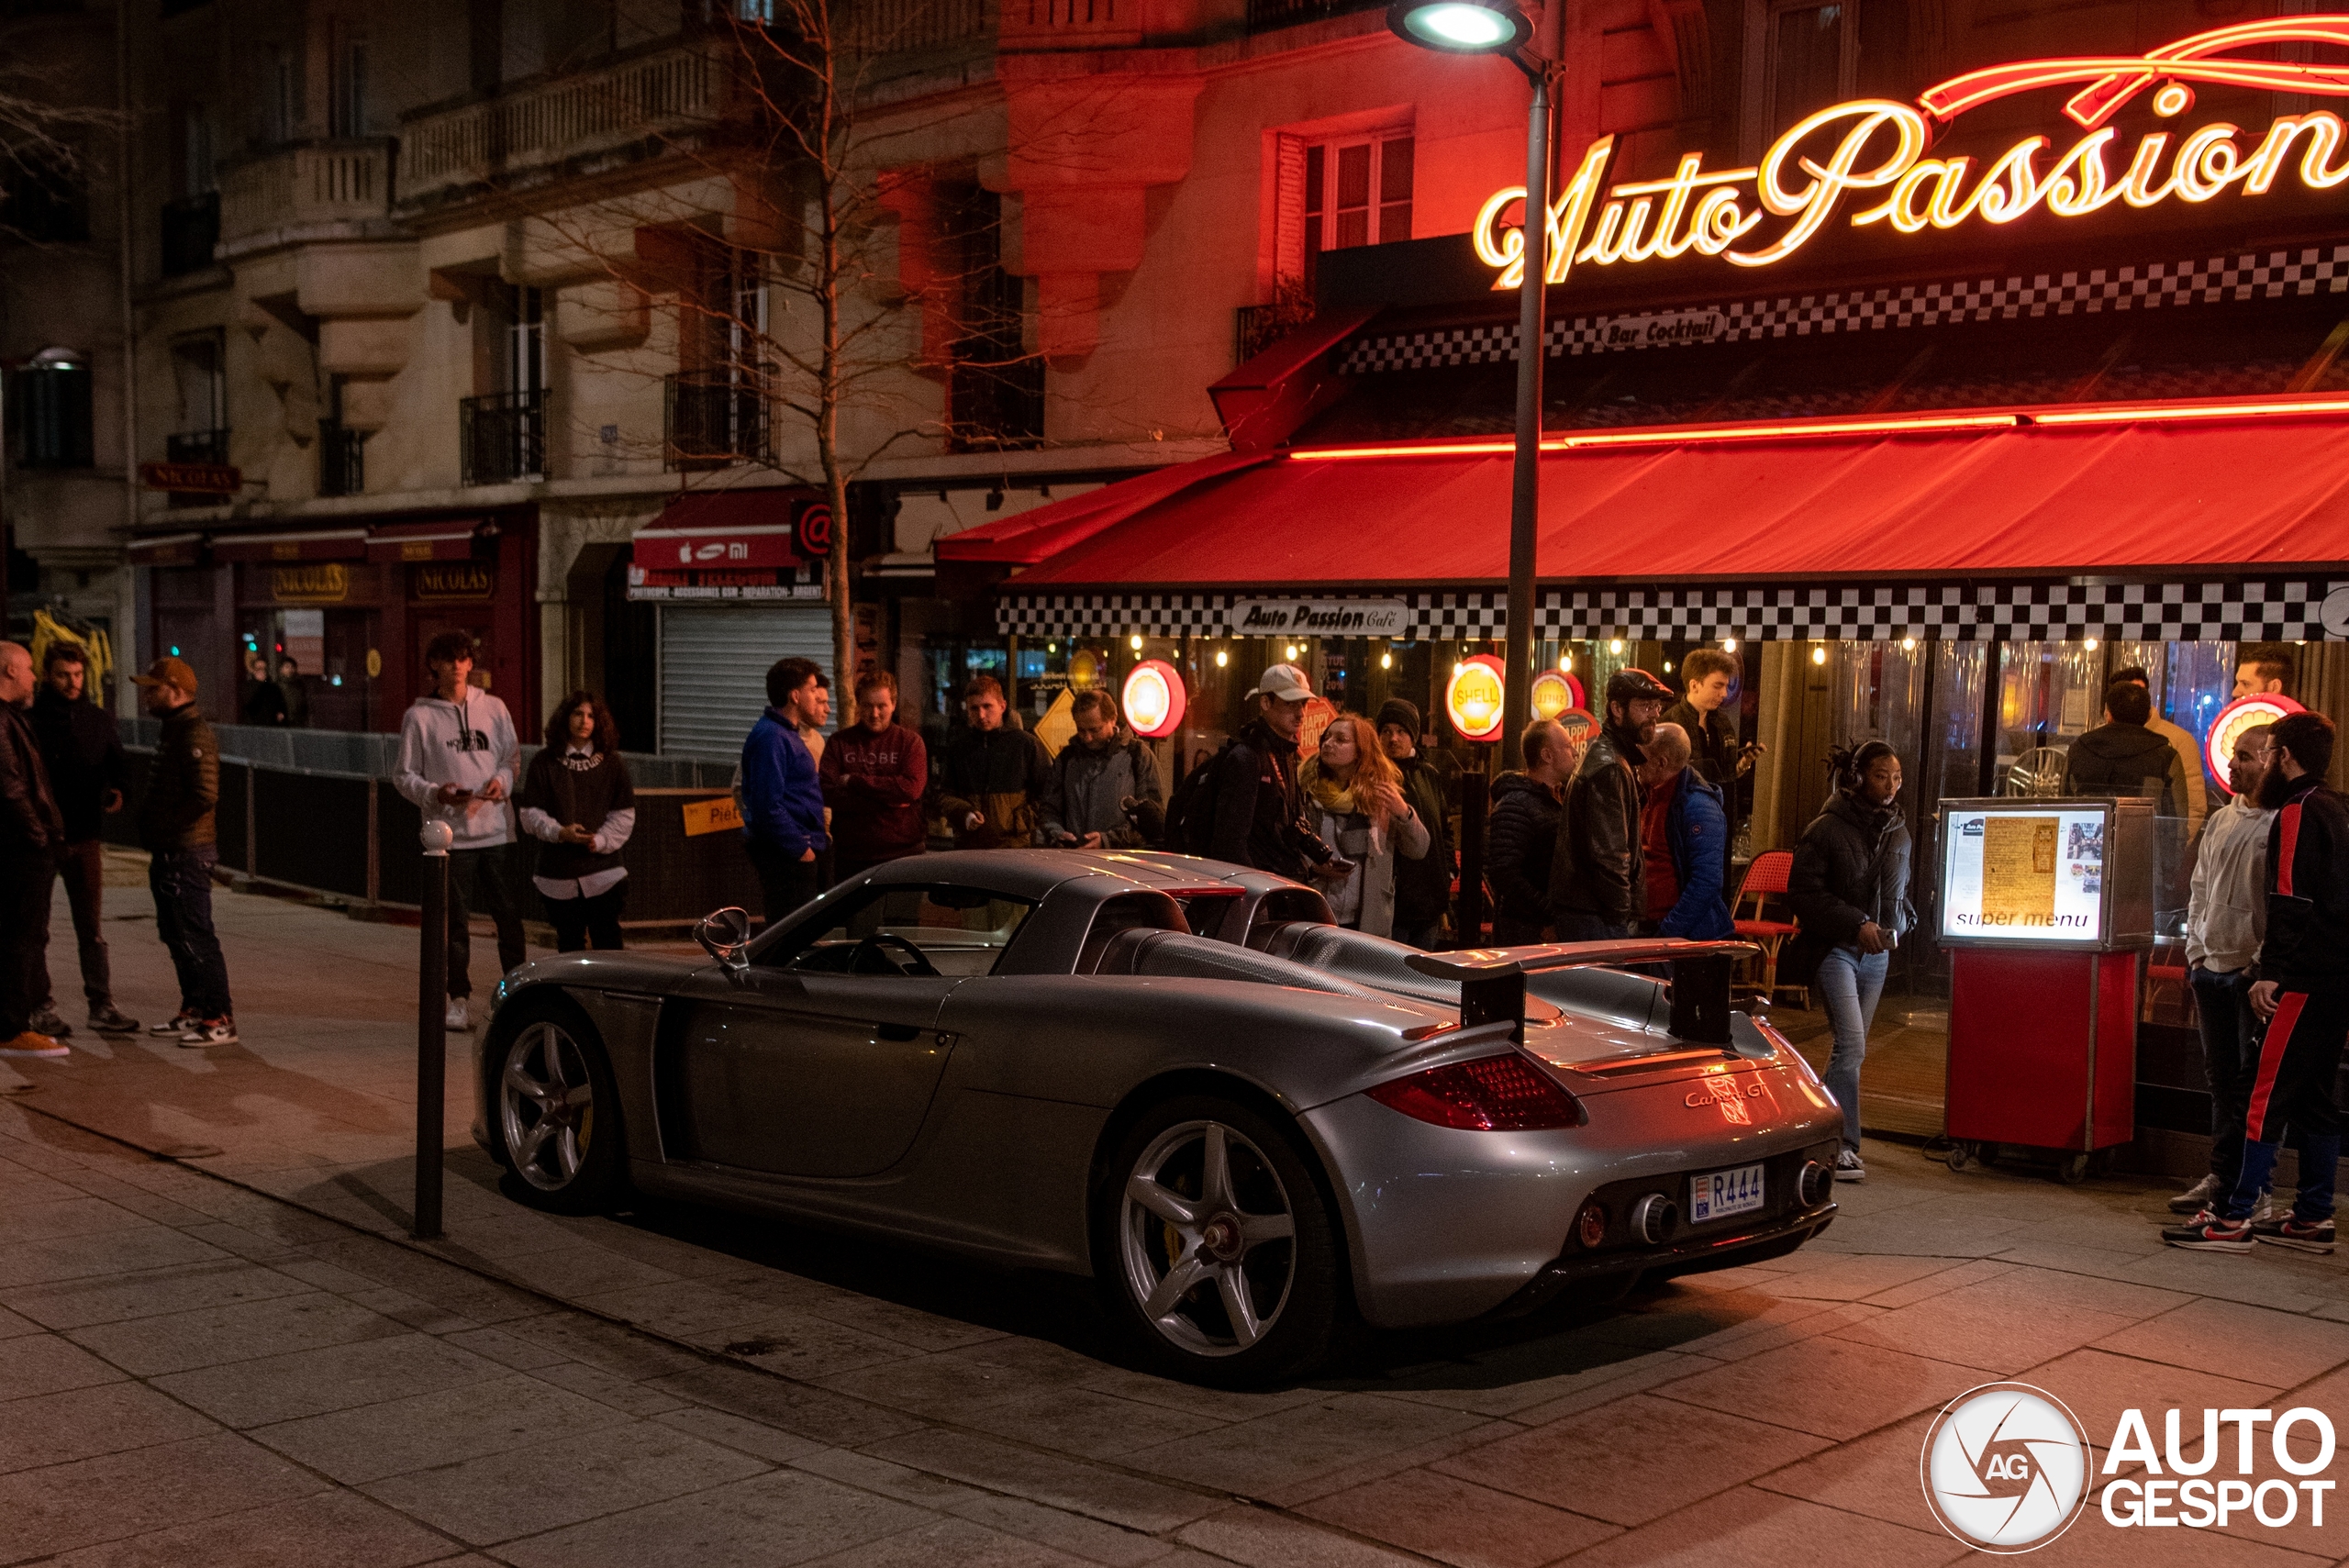 The Carrera GT legend shows up in Paris